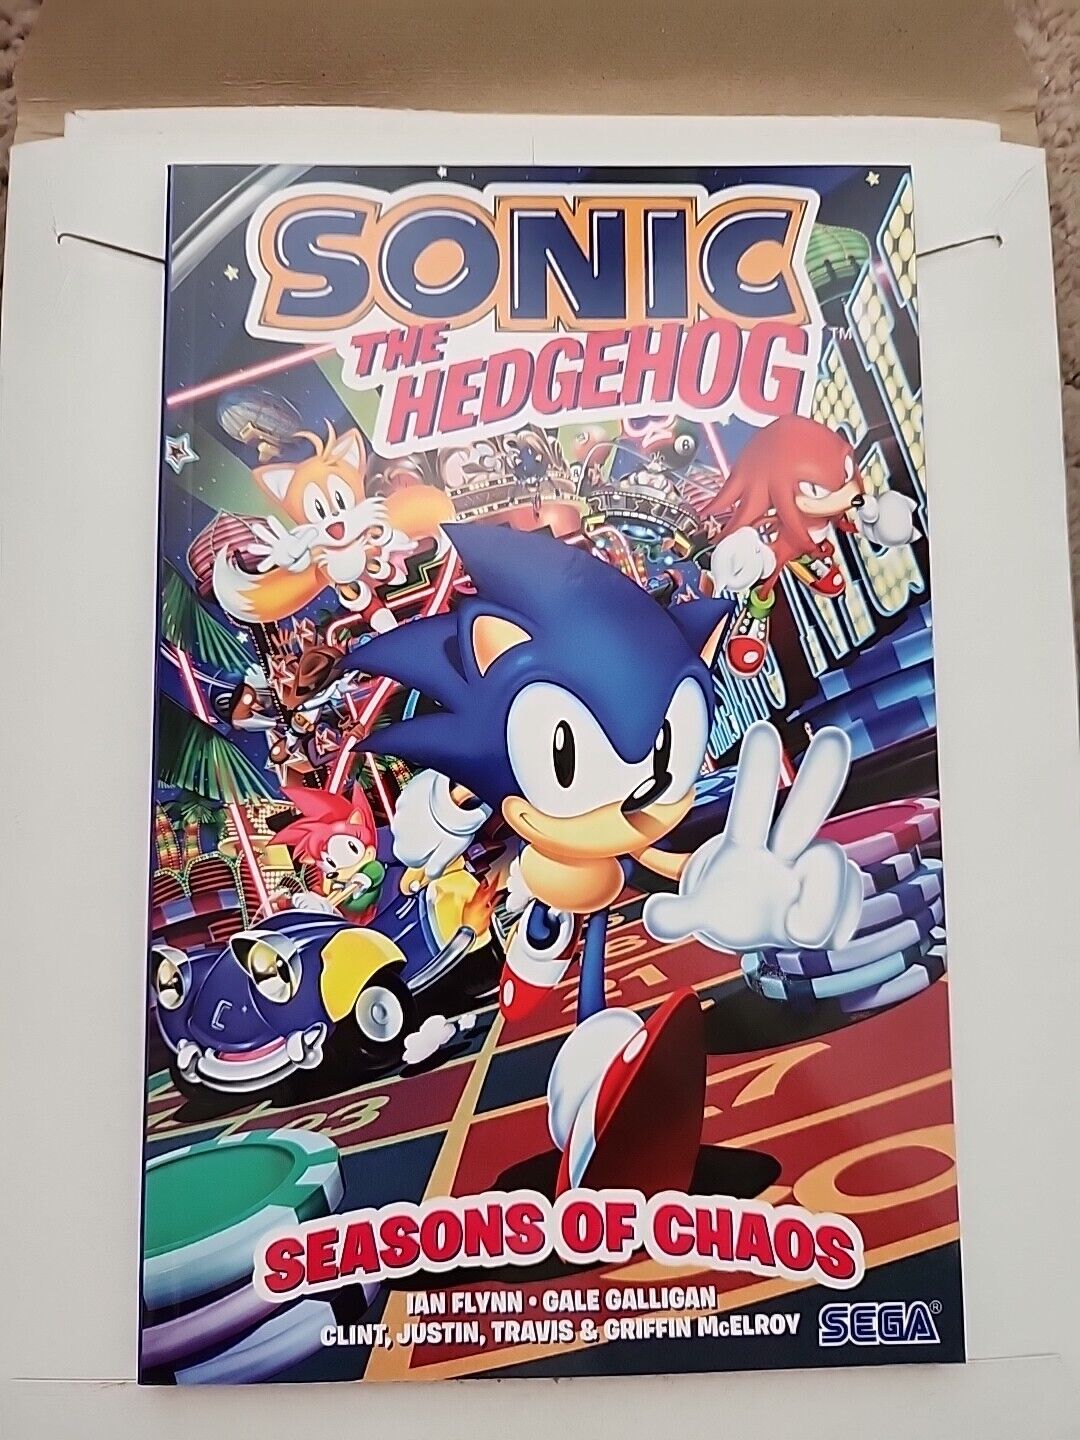 Sonic the Hedgehog: Seasons of Chaos Paperback by Ian Flynn